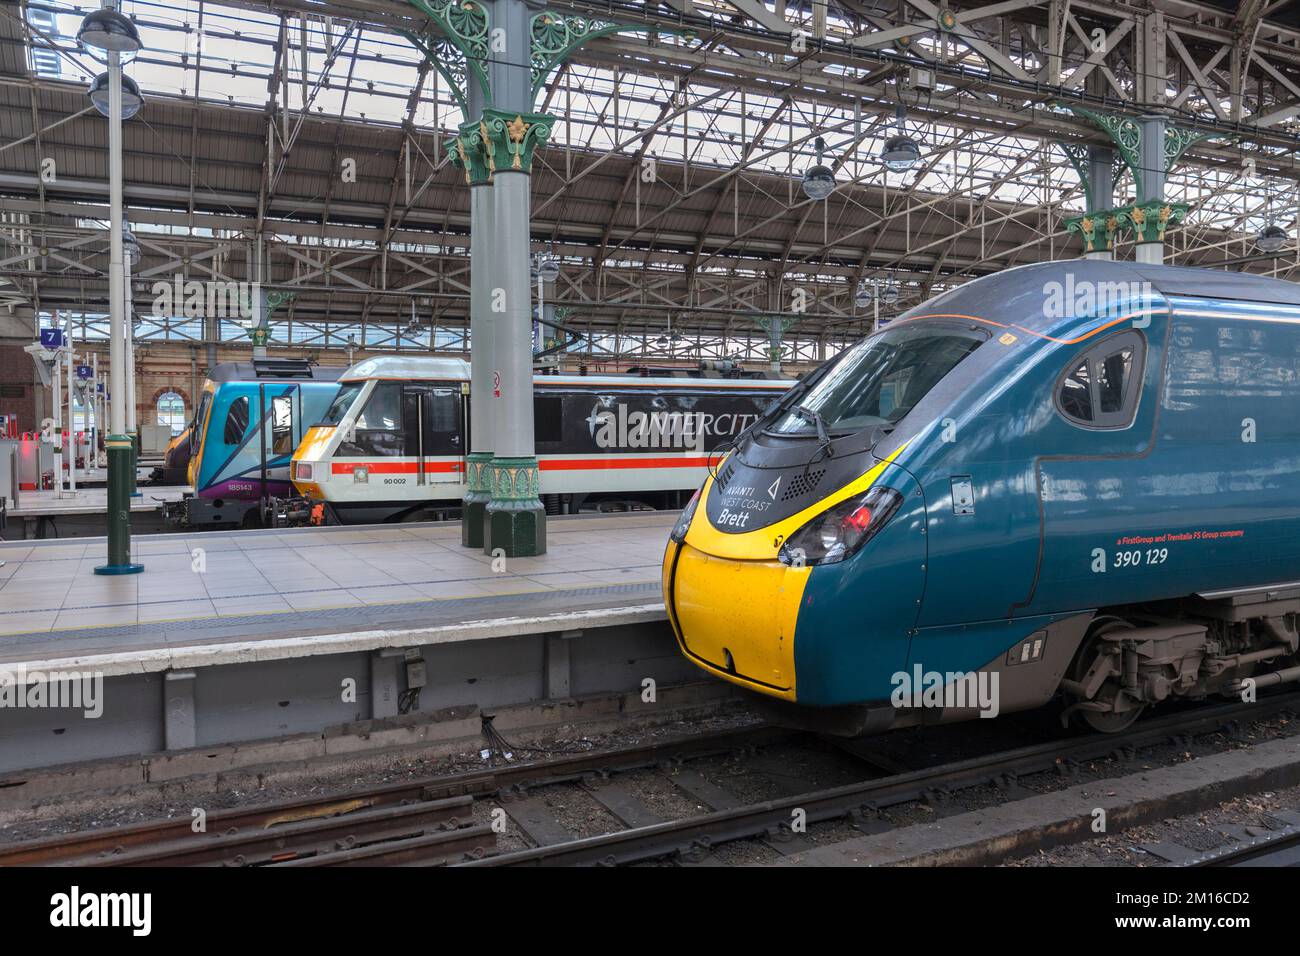 Avanti west Coast, Intercity railtours and Transpennine Express trains at Manchester Piccadilly railway station, UK Stock Photo